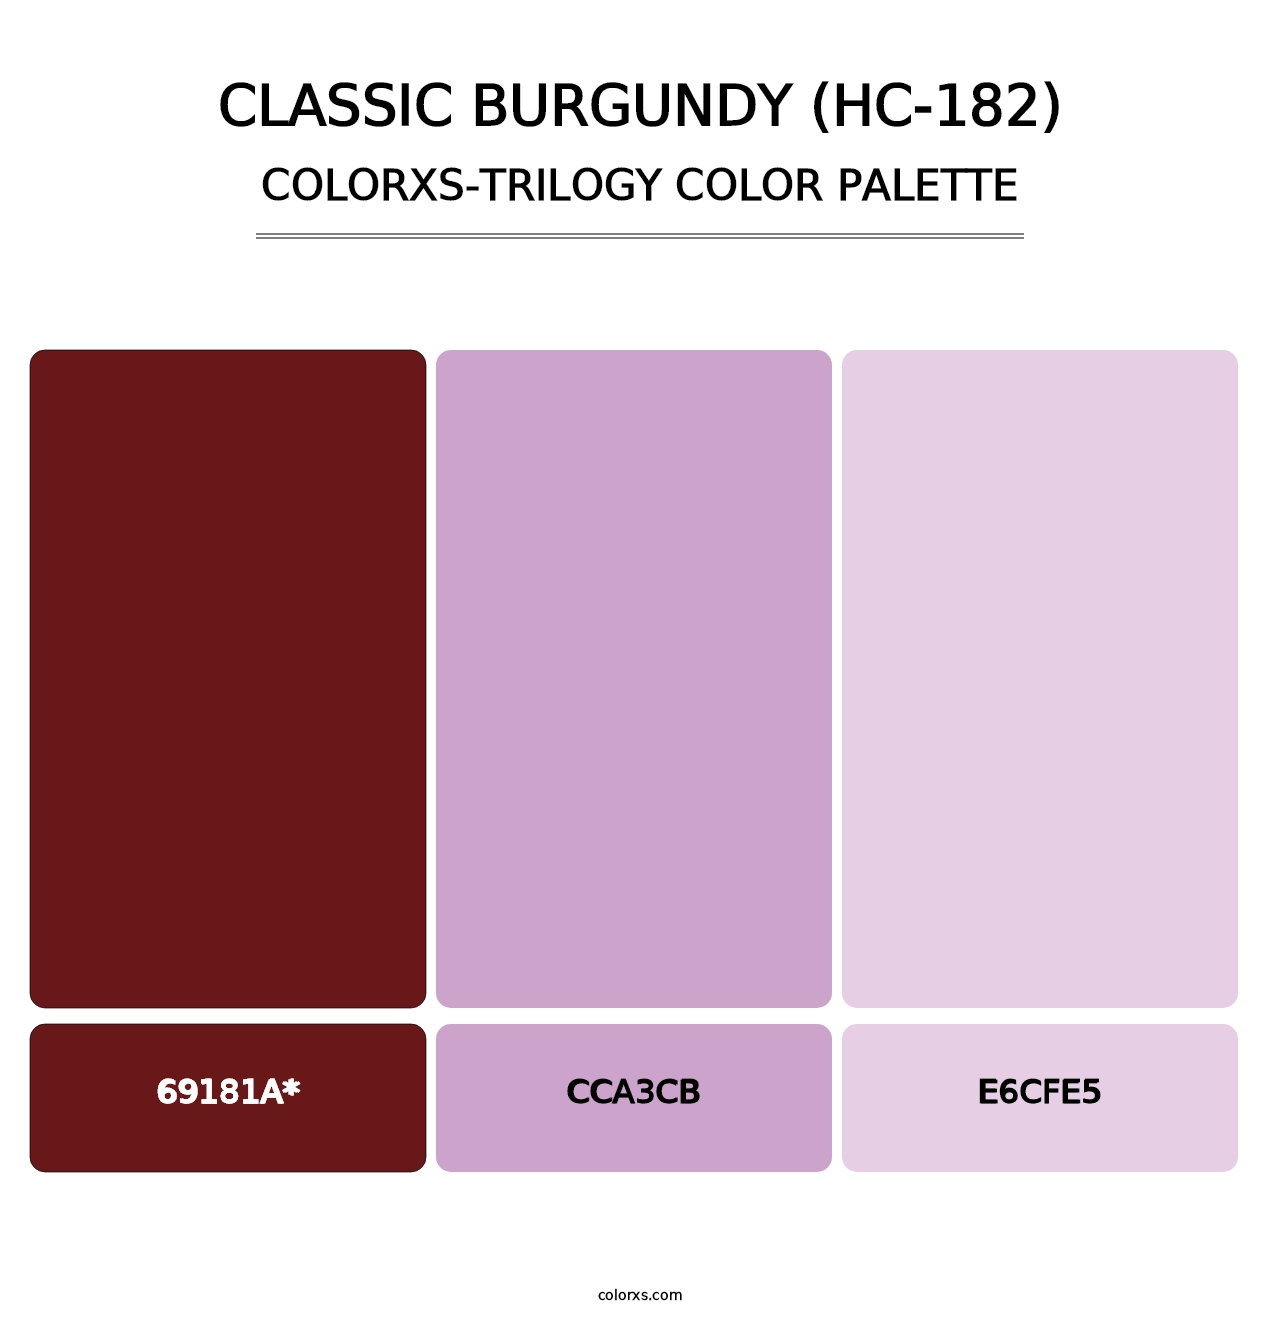 Classic Burgundy (HC-182) - Colorxs Trilogy Palette